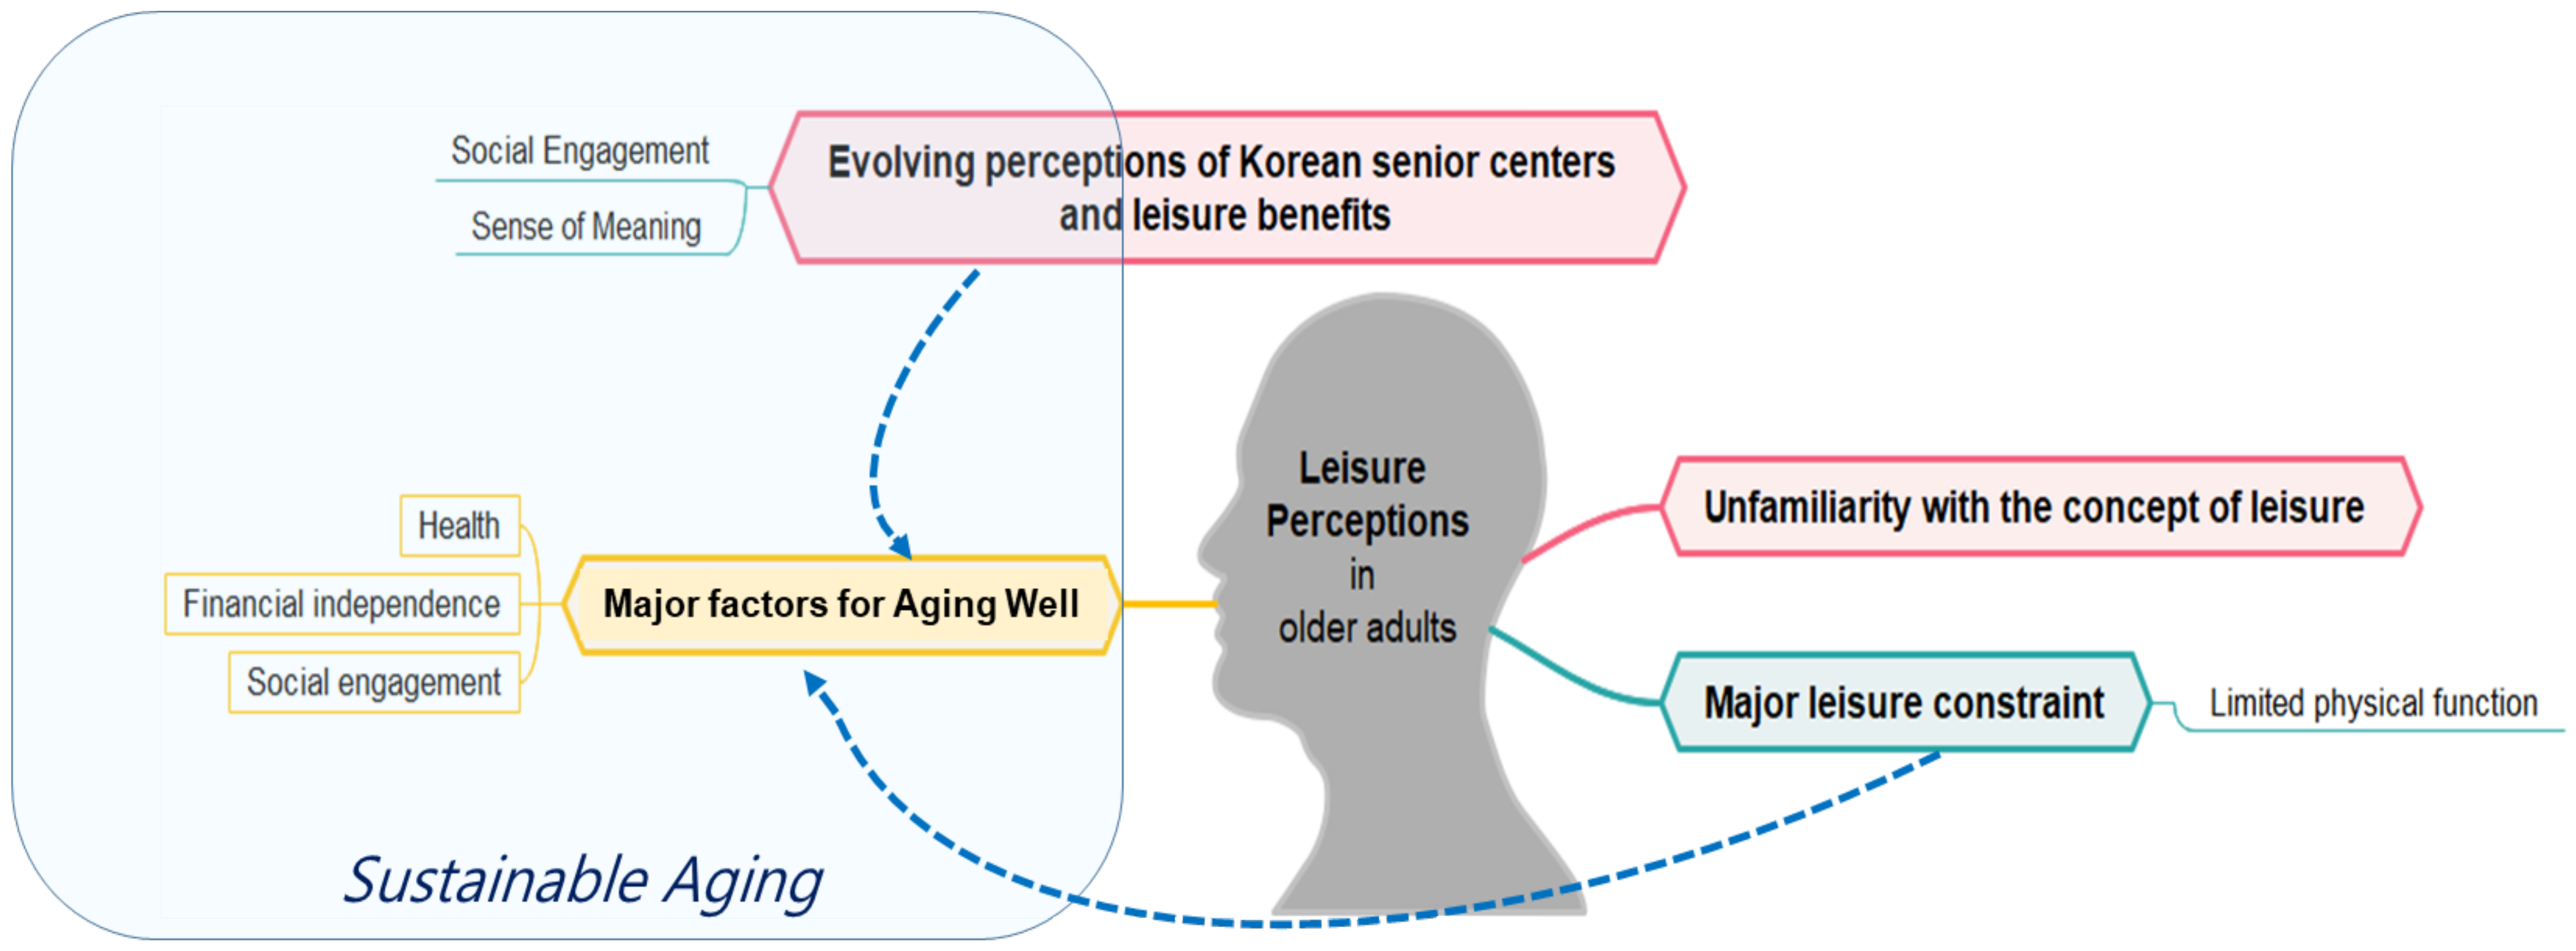 Aging Gracefully- The Benefits of Regular Exercise for Senior Citizens